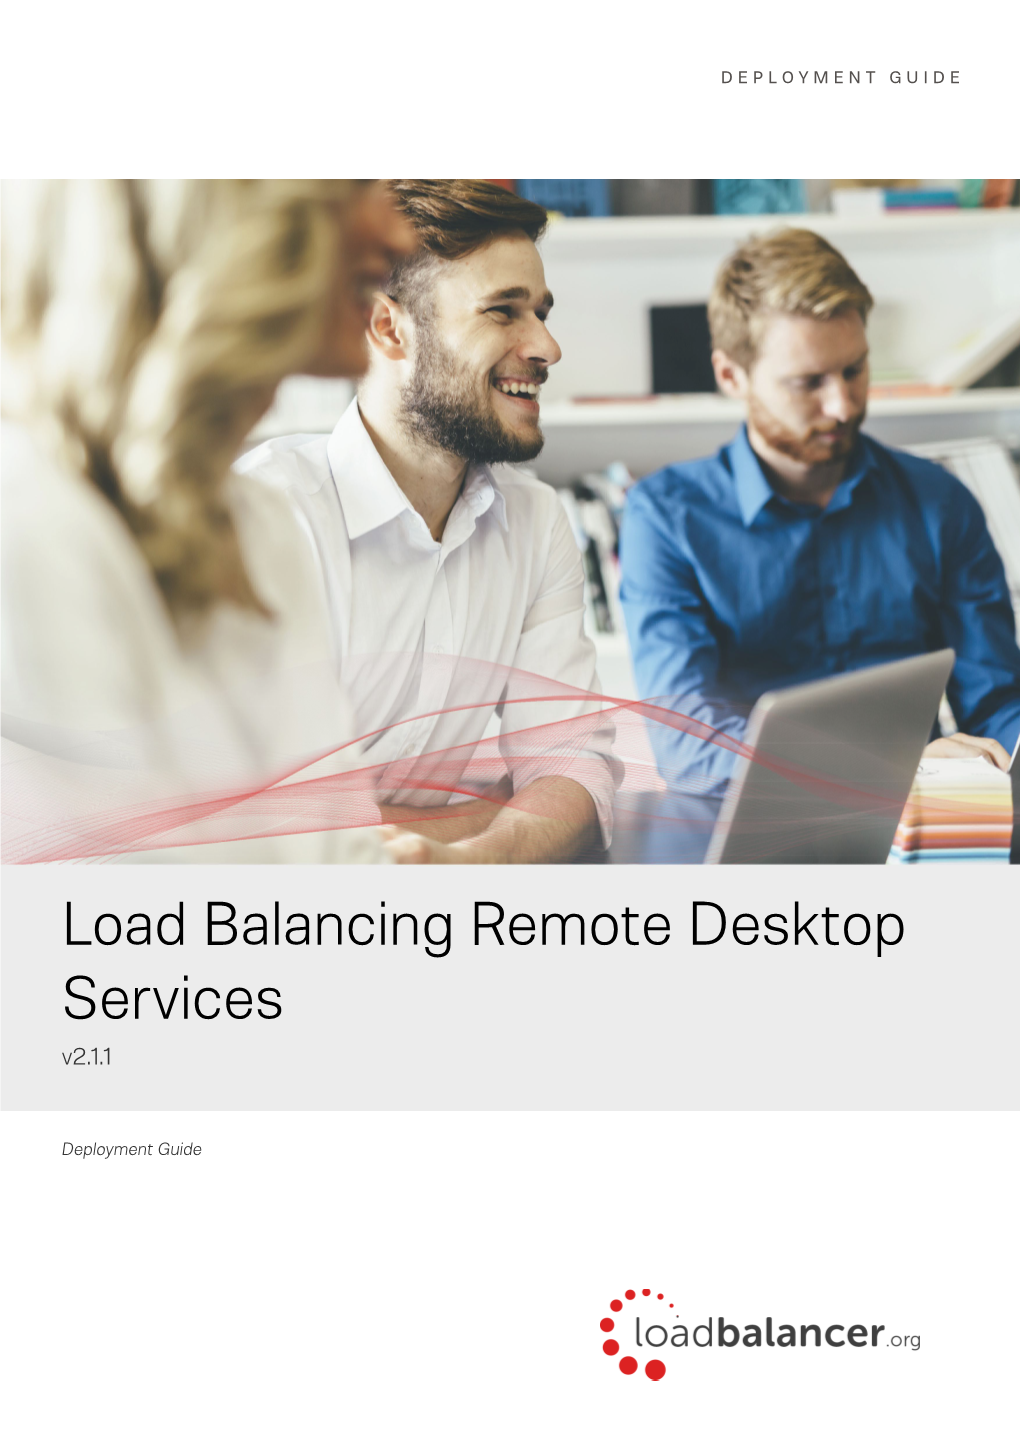 Load Balancing Microsoft Remote Desktop Services